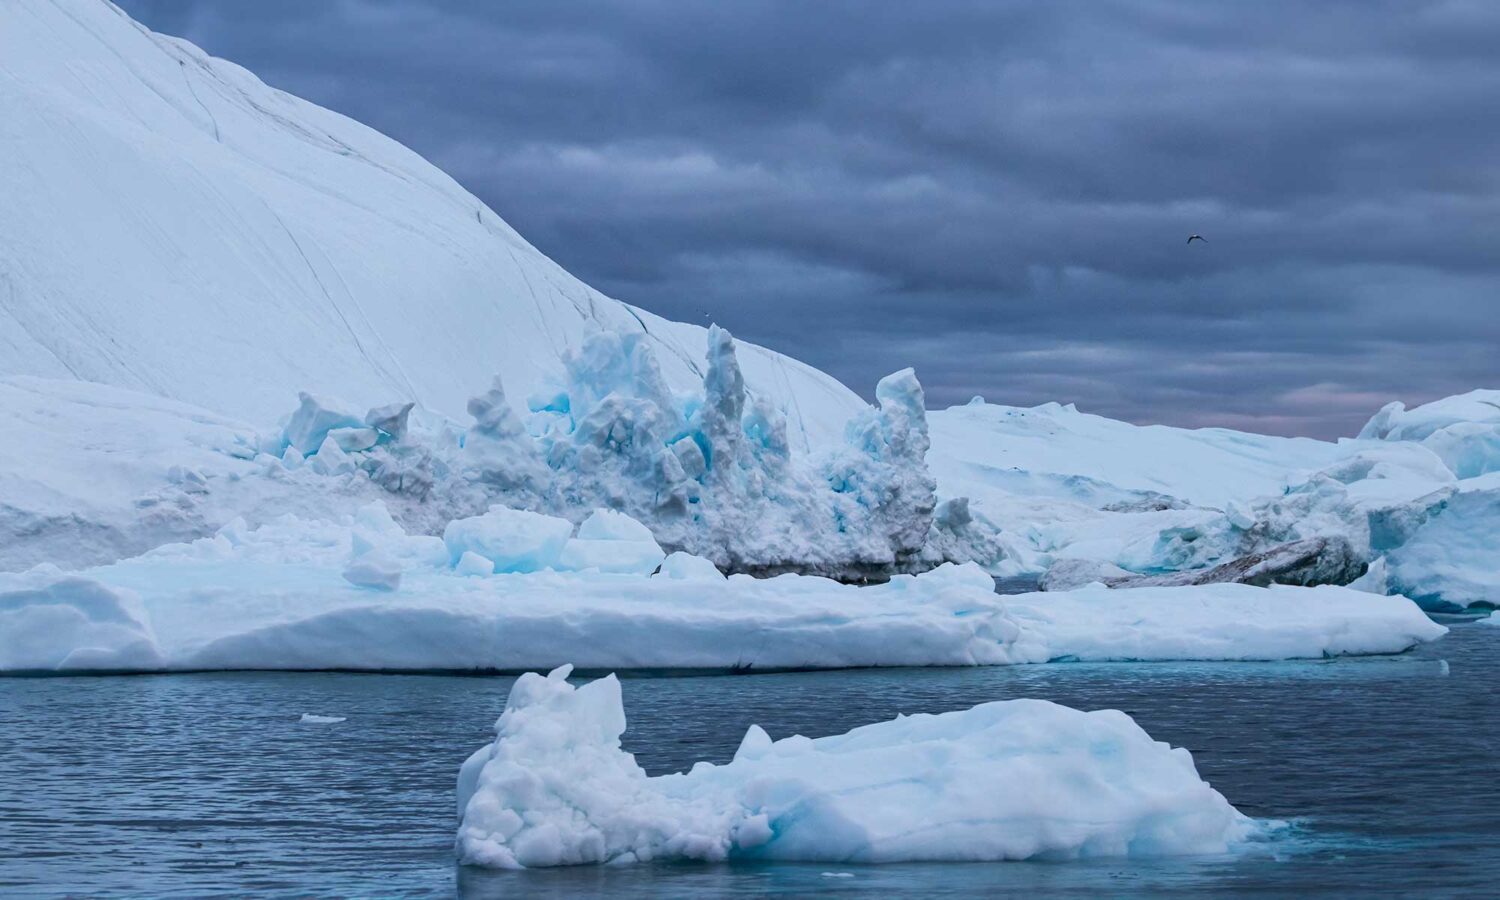 Awe-inspiring views of Greenland icebergs during a midnight sun cruise